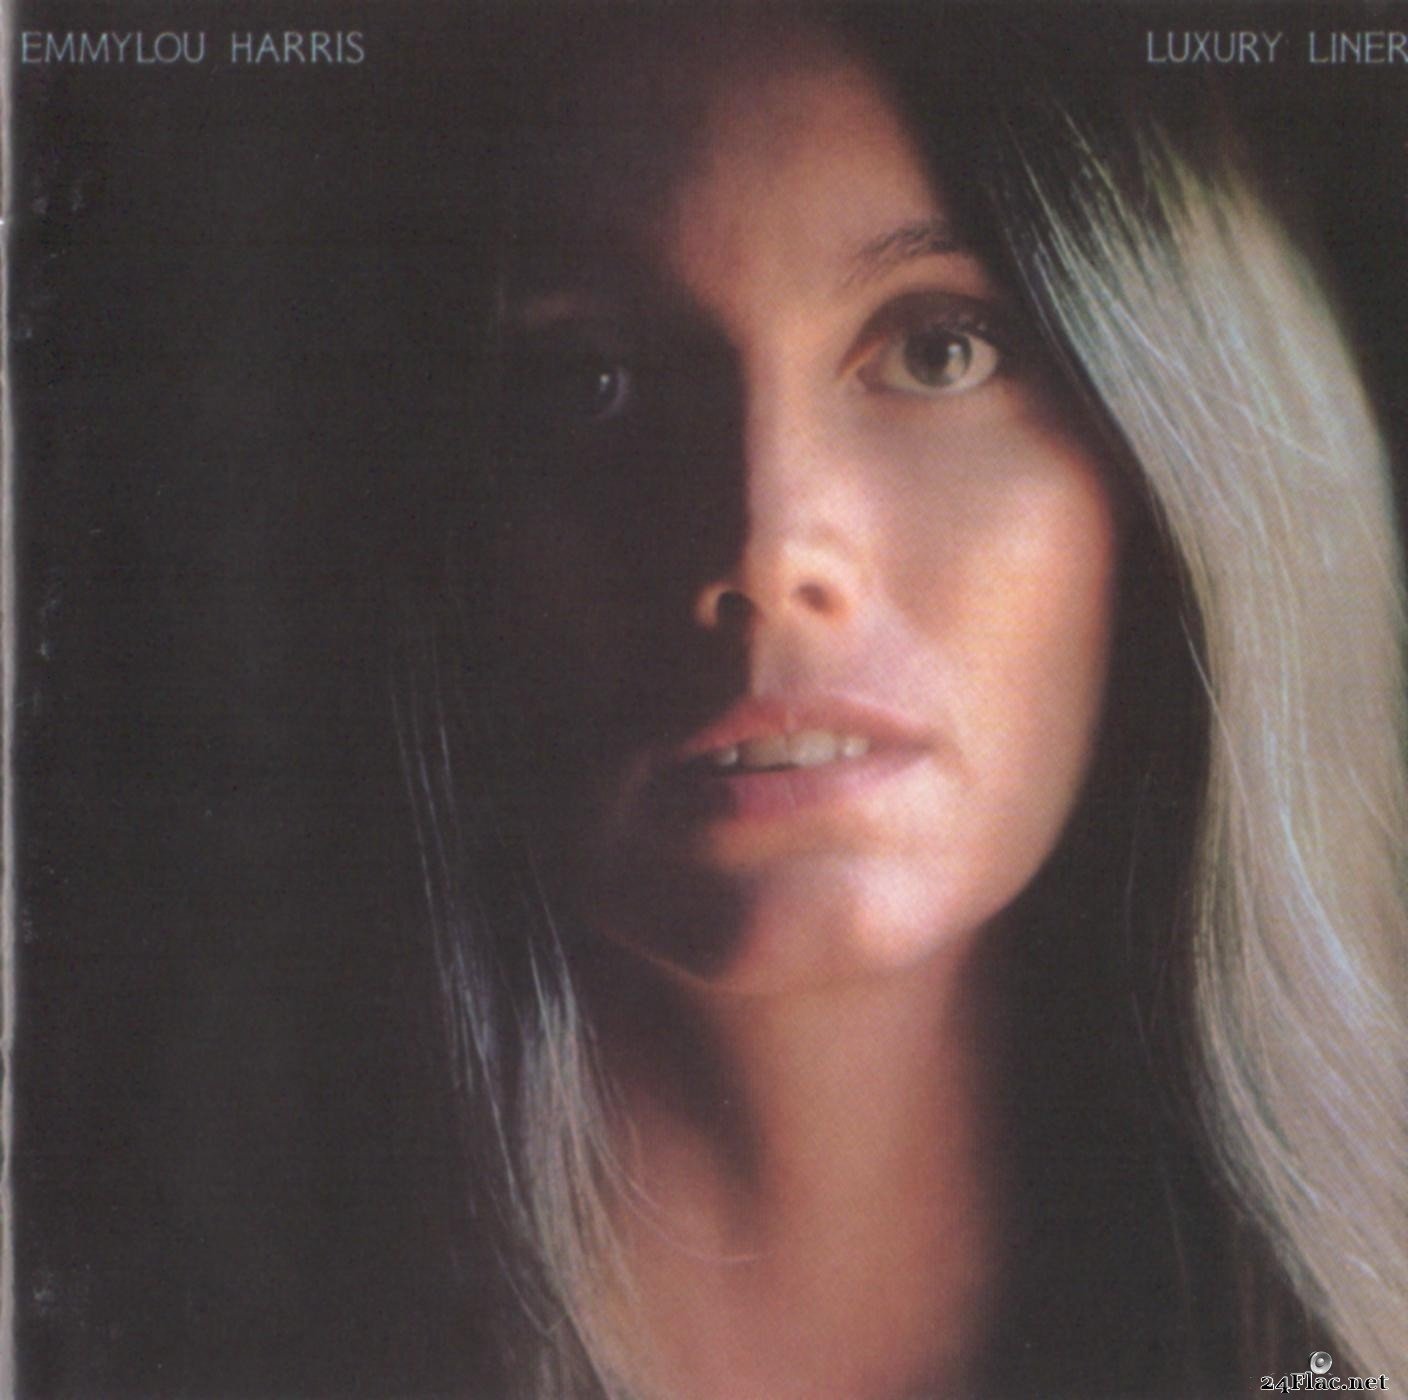 Emmylou Harris - Luxury Liner (2004) FLAC + Vinyl